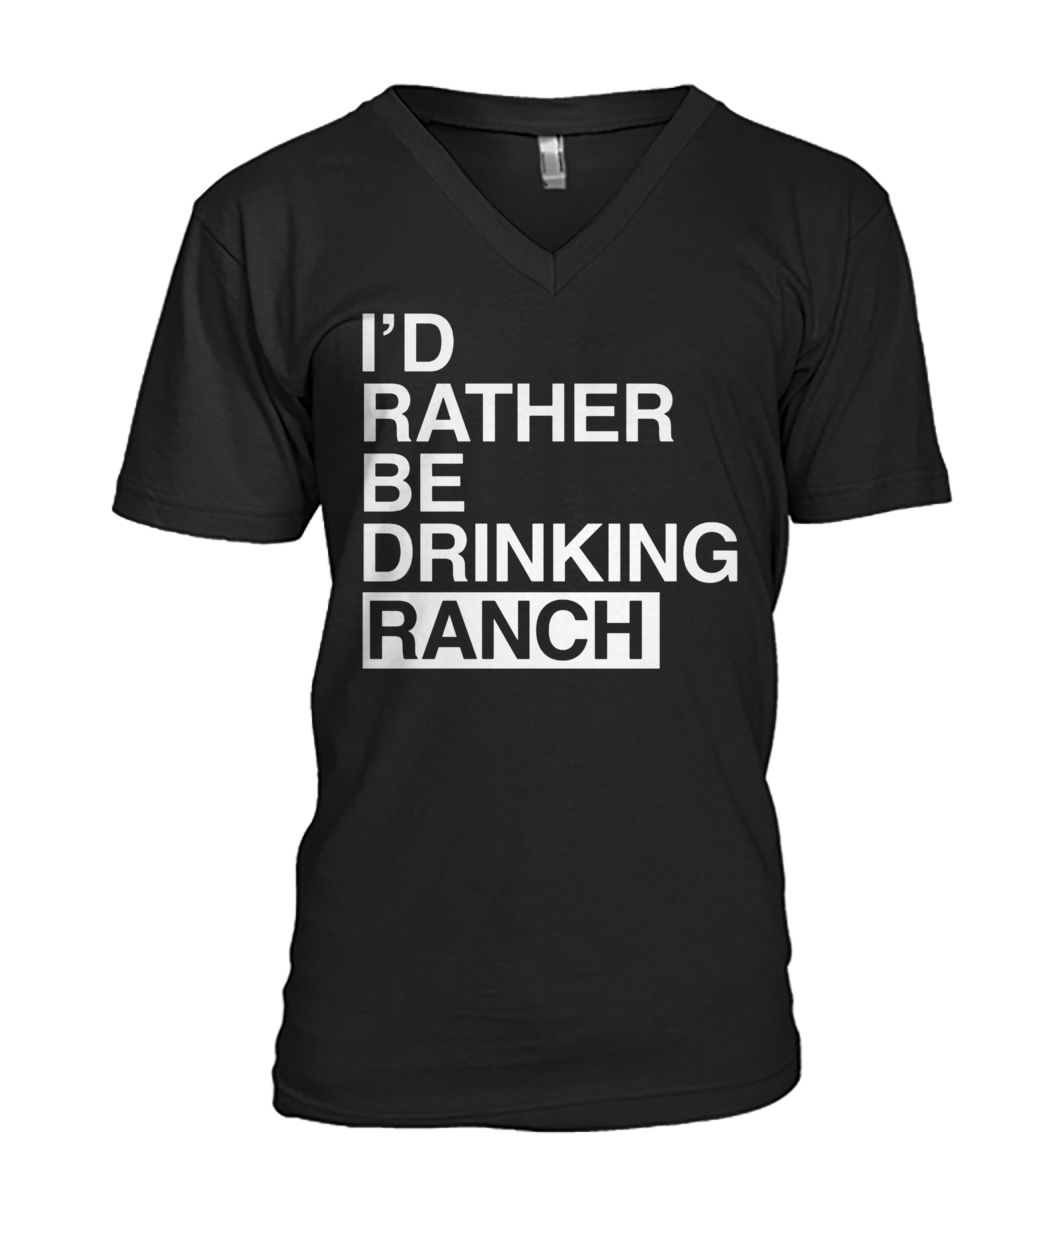 I'd rather be drinking ranch mens v-neck